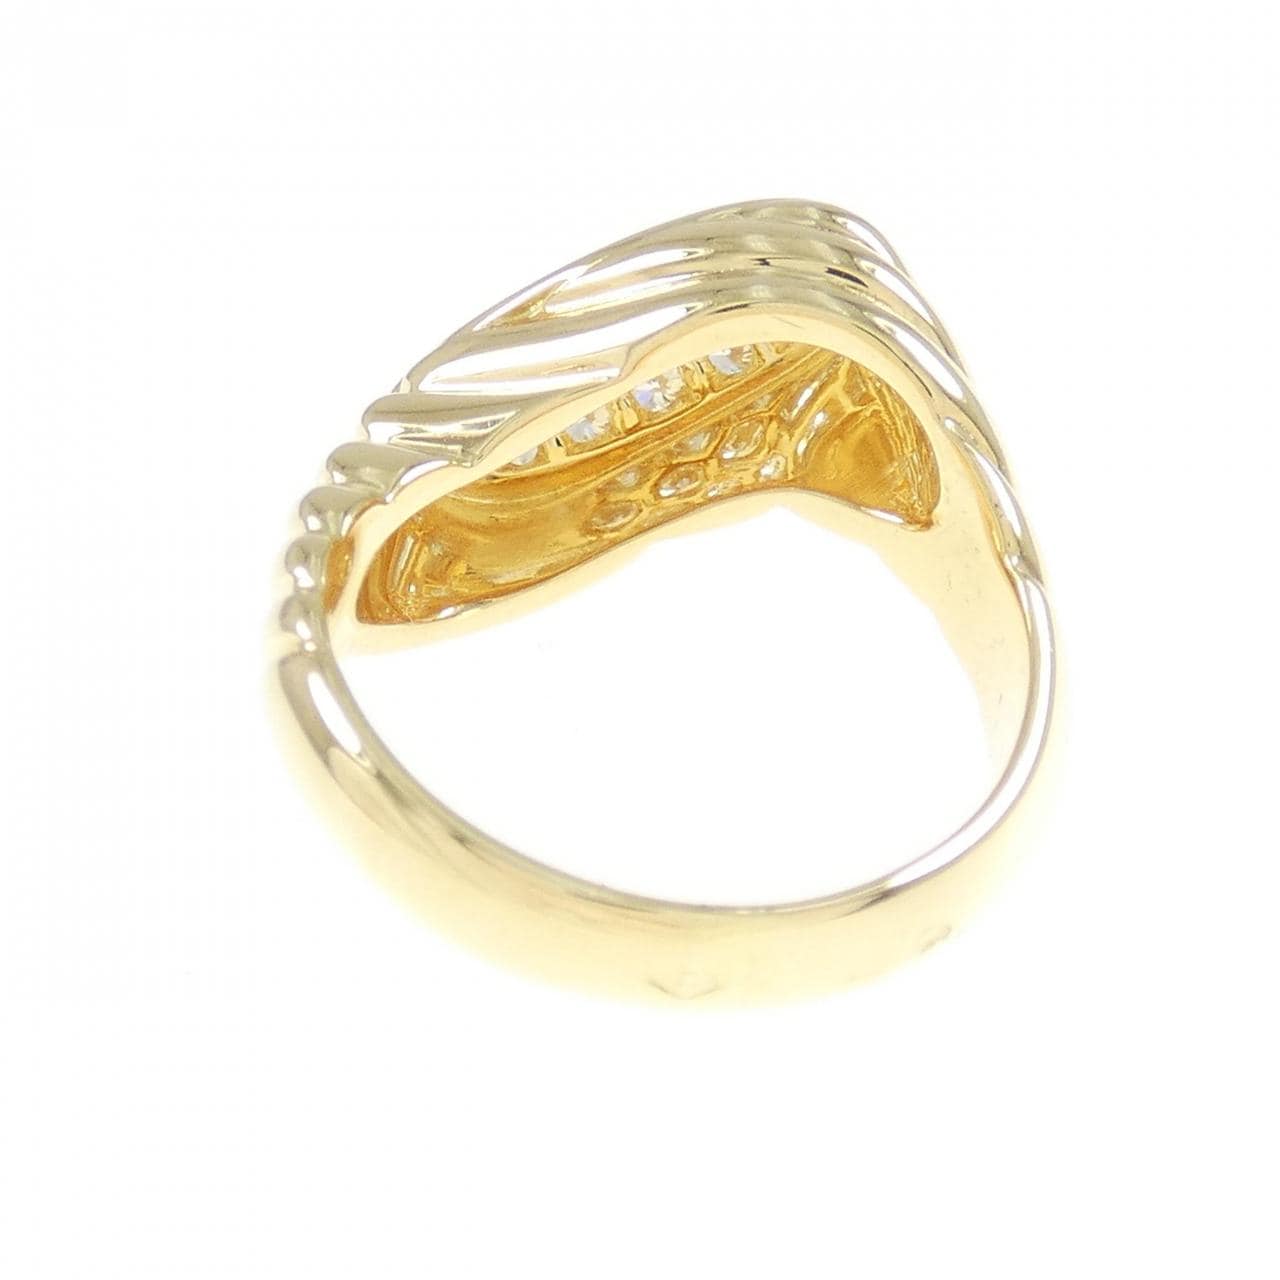 [vintage] Boucheron鑽石戒指